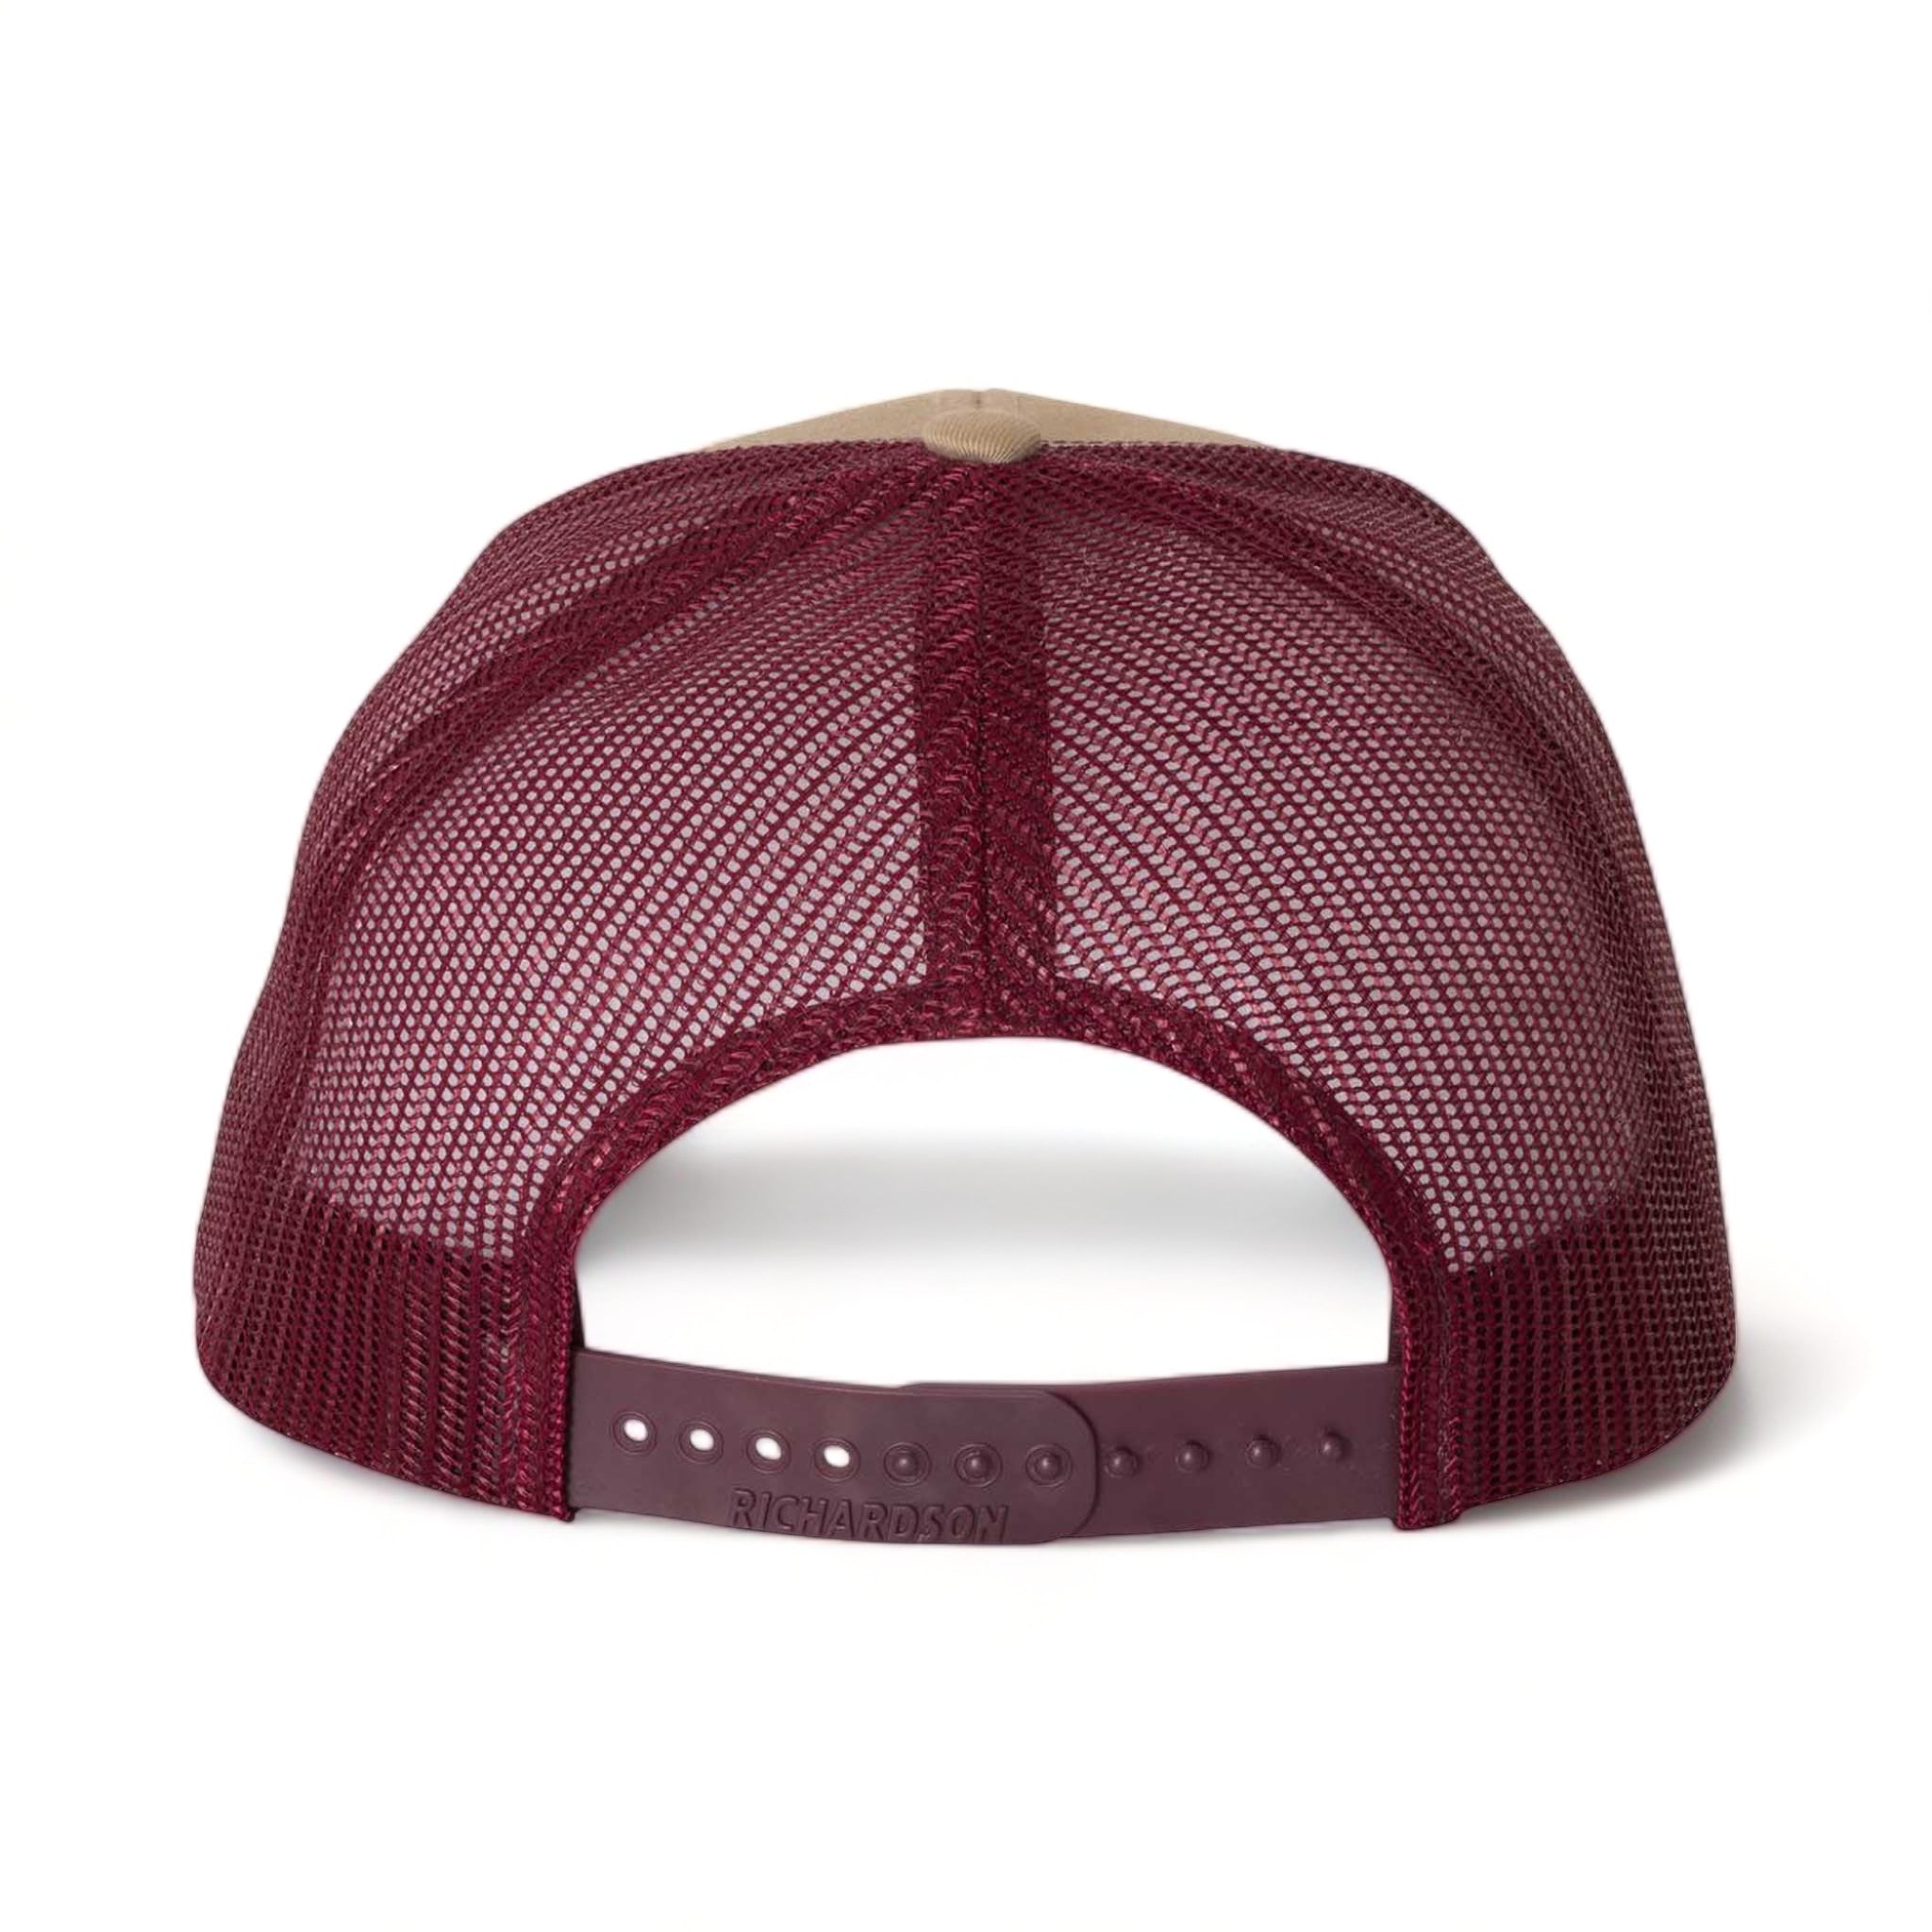 Back view of Richardson 112 custom hat in khaki and burgundy